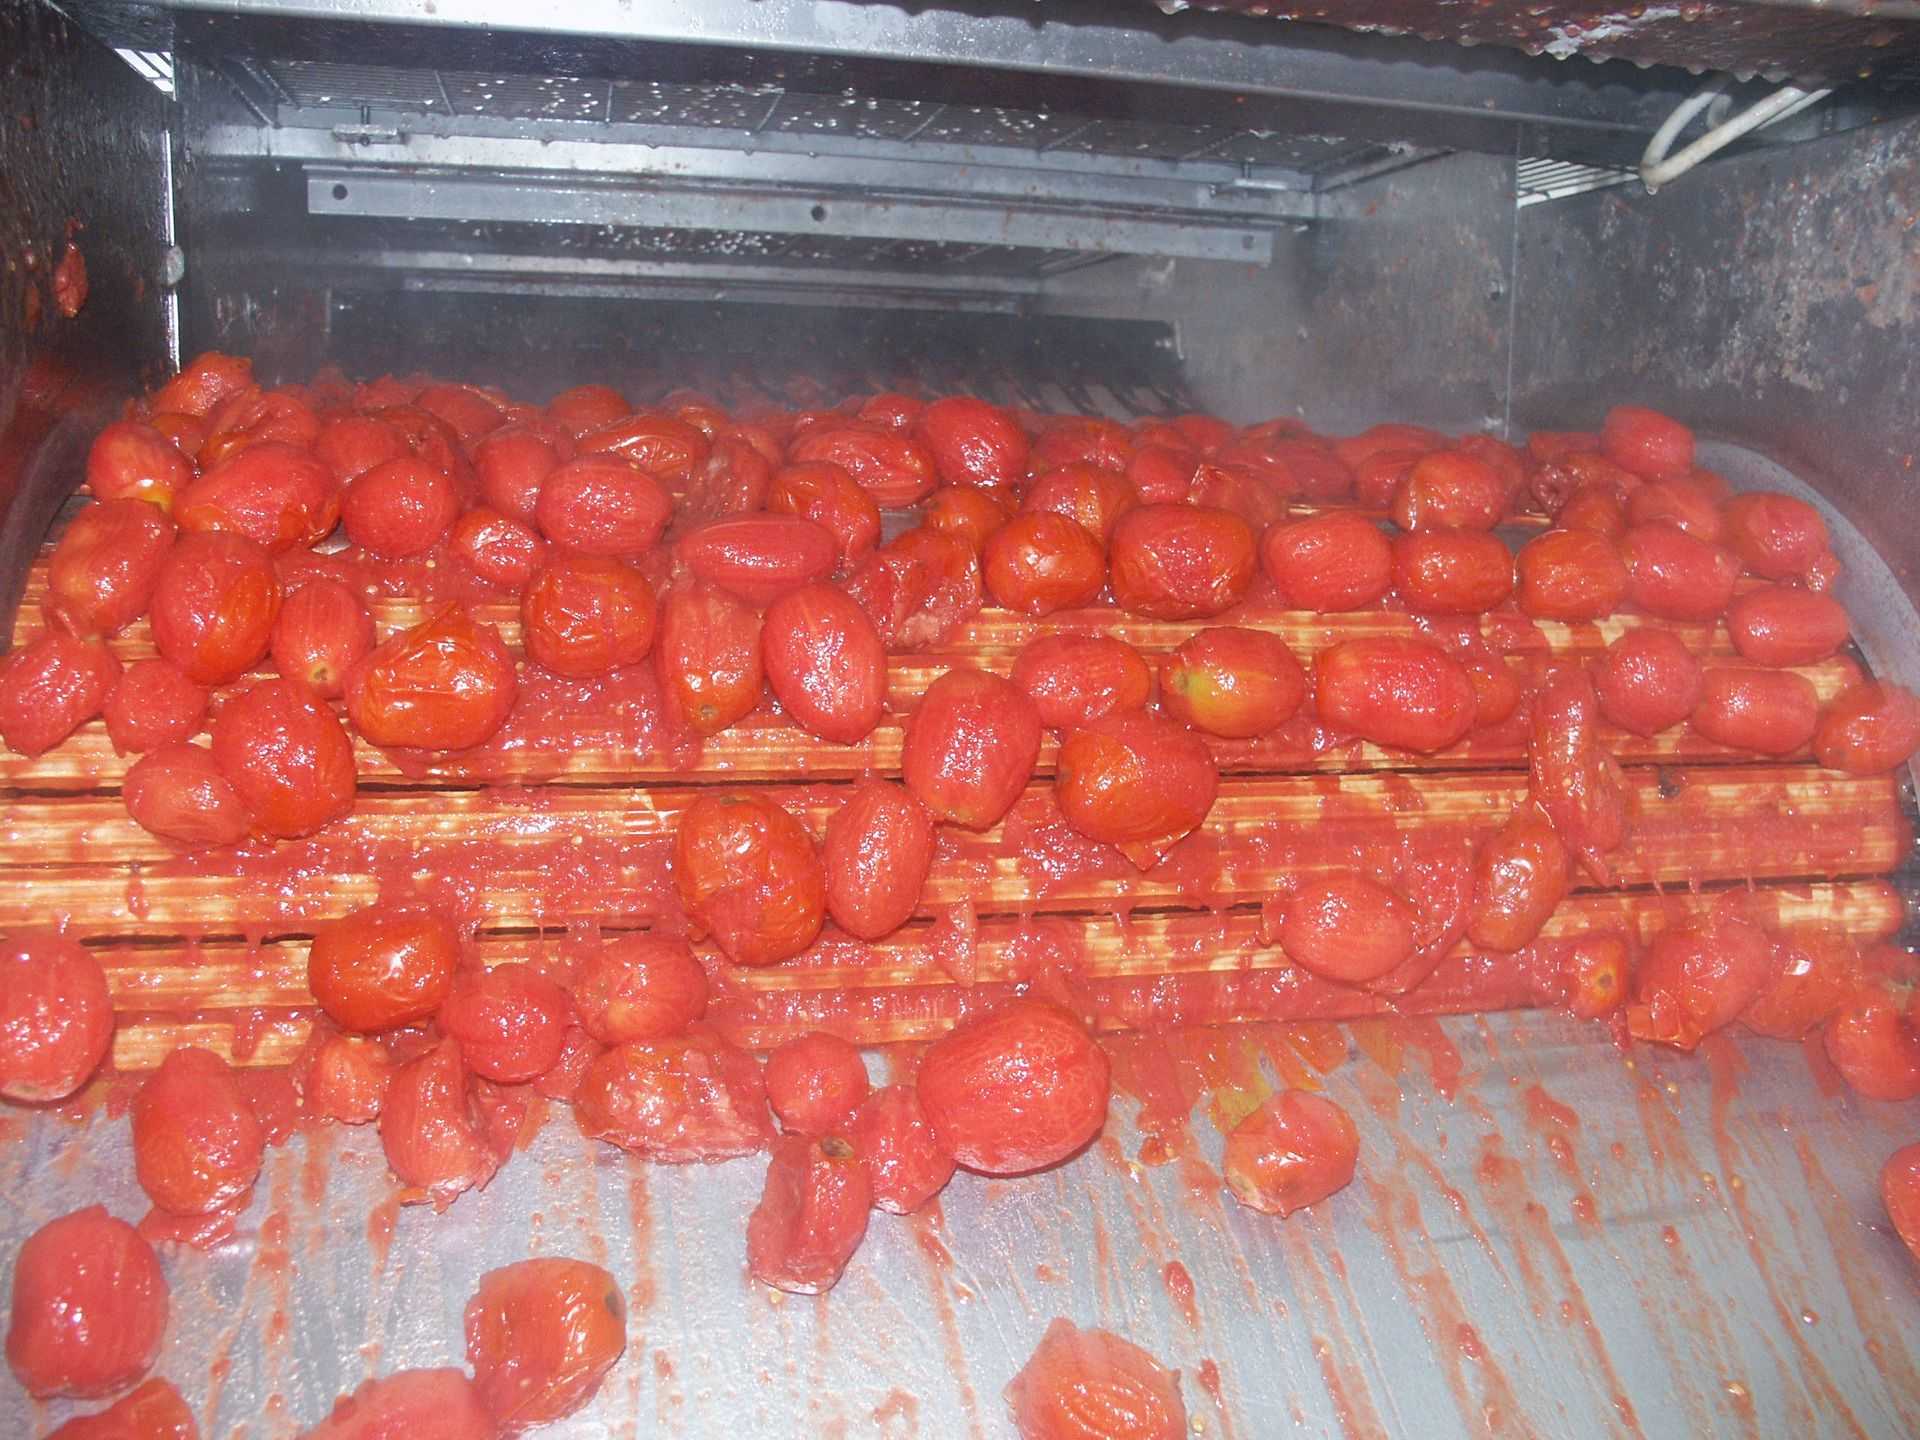 Industrial Tomato Peeling Skin Off Machine Tomato Peeler